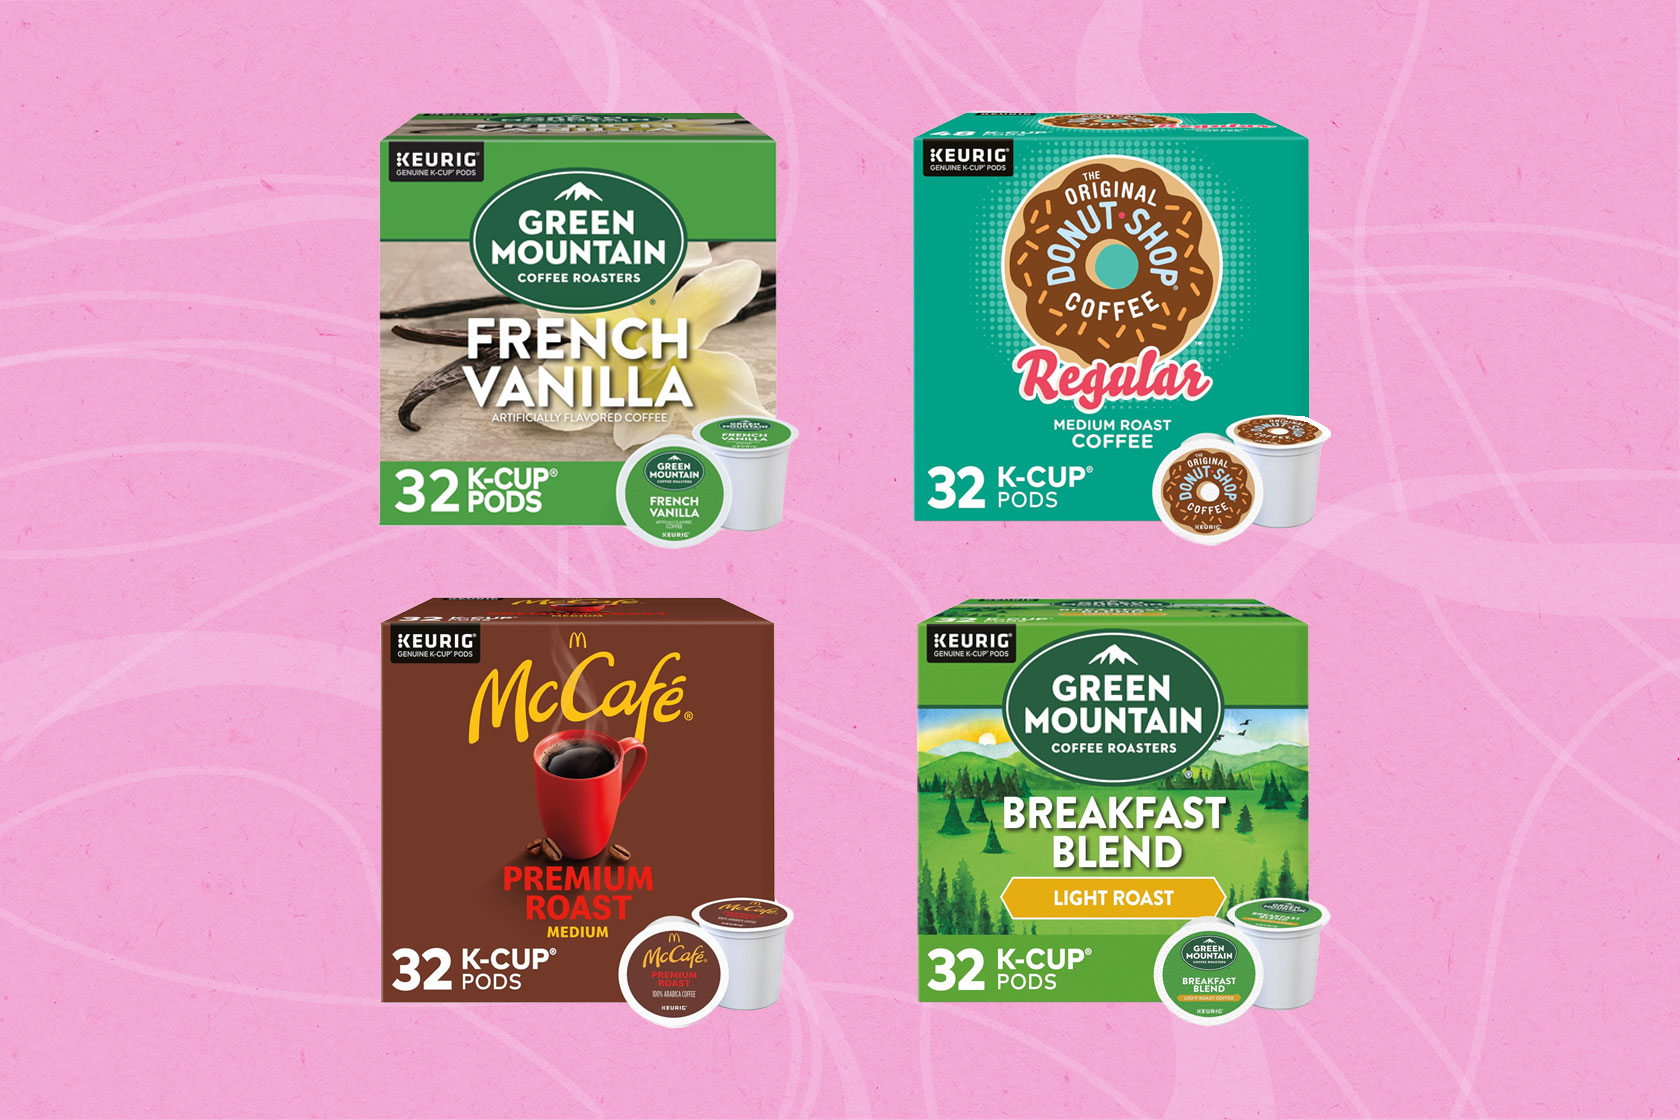  McCafe Premium Medium Roast K-Cup Coffee Pods (32 Pods